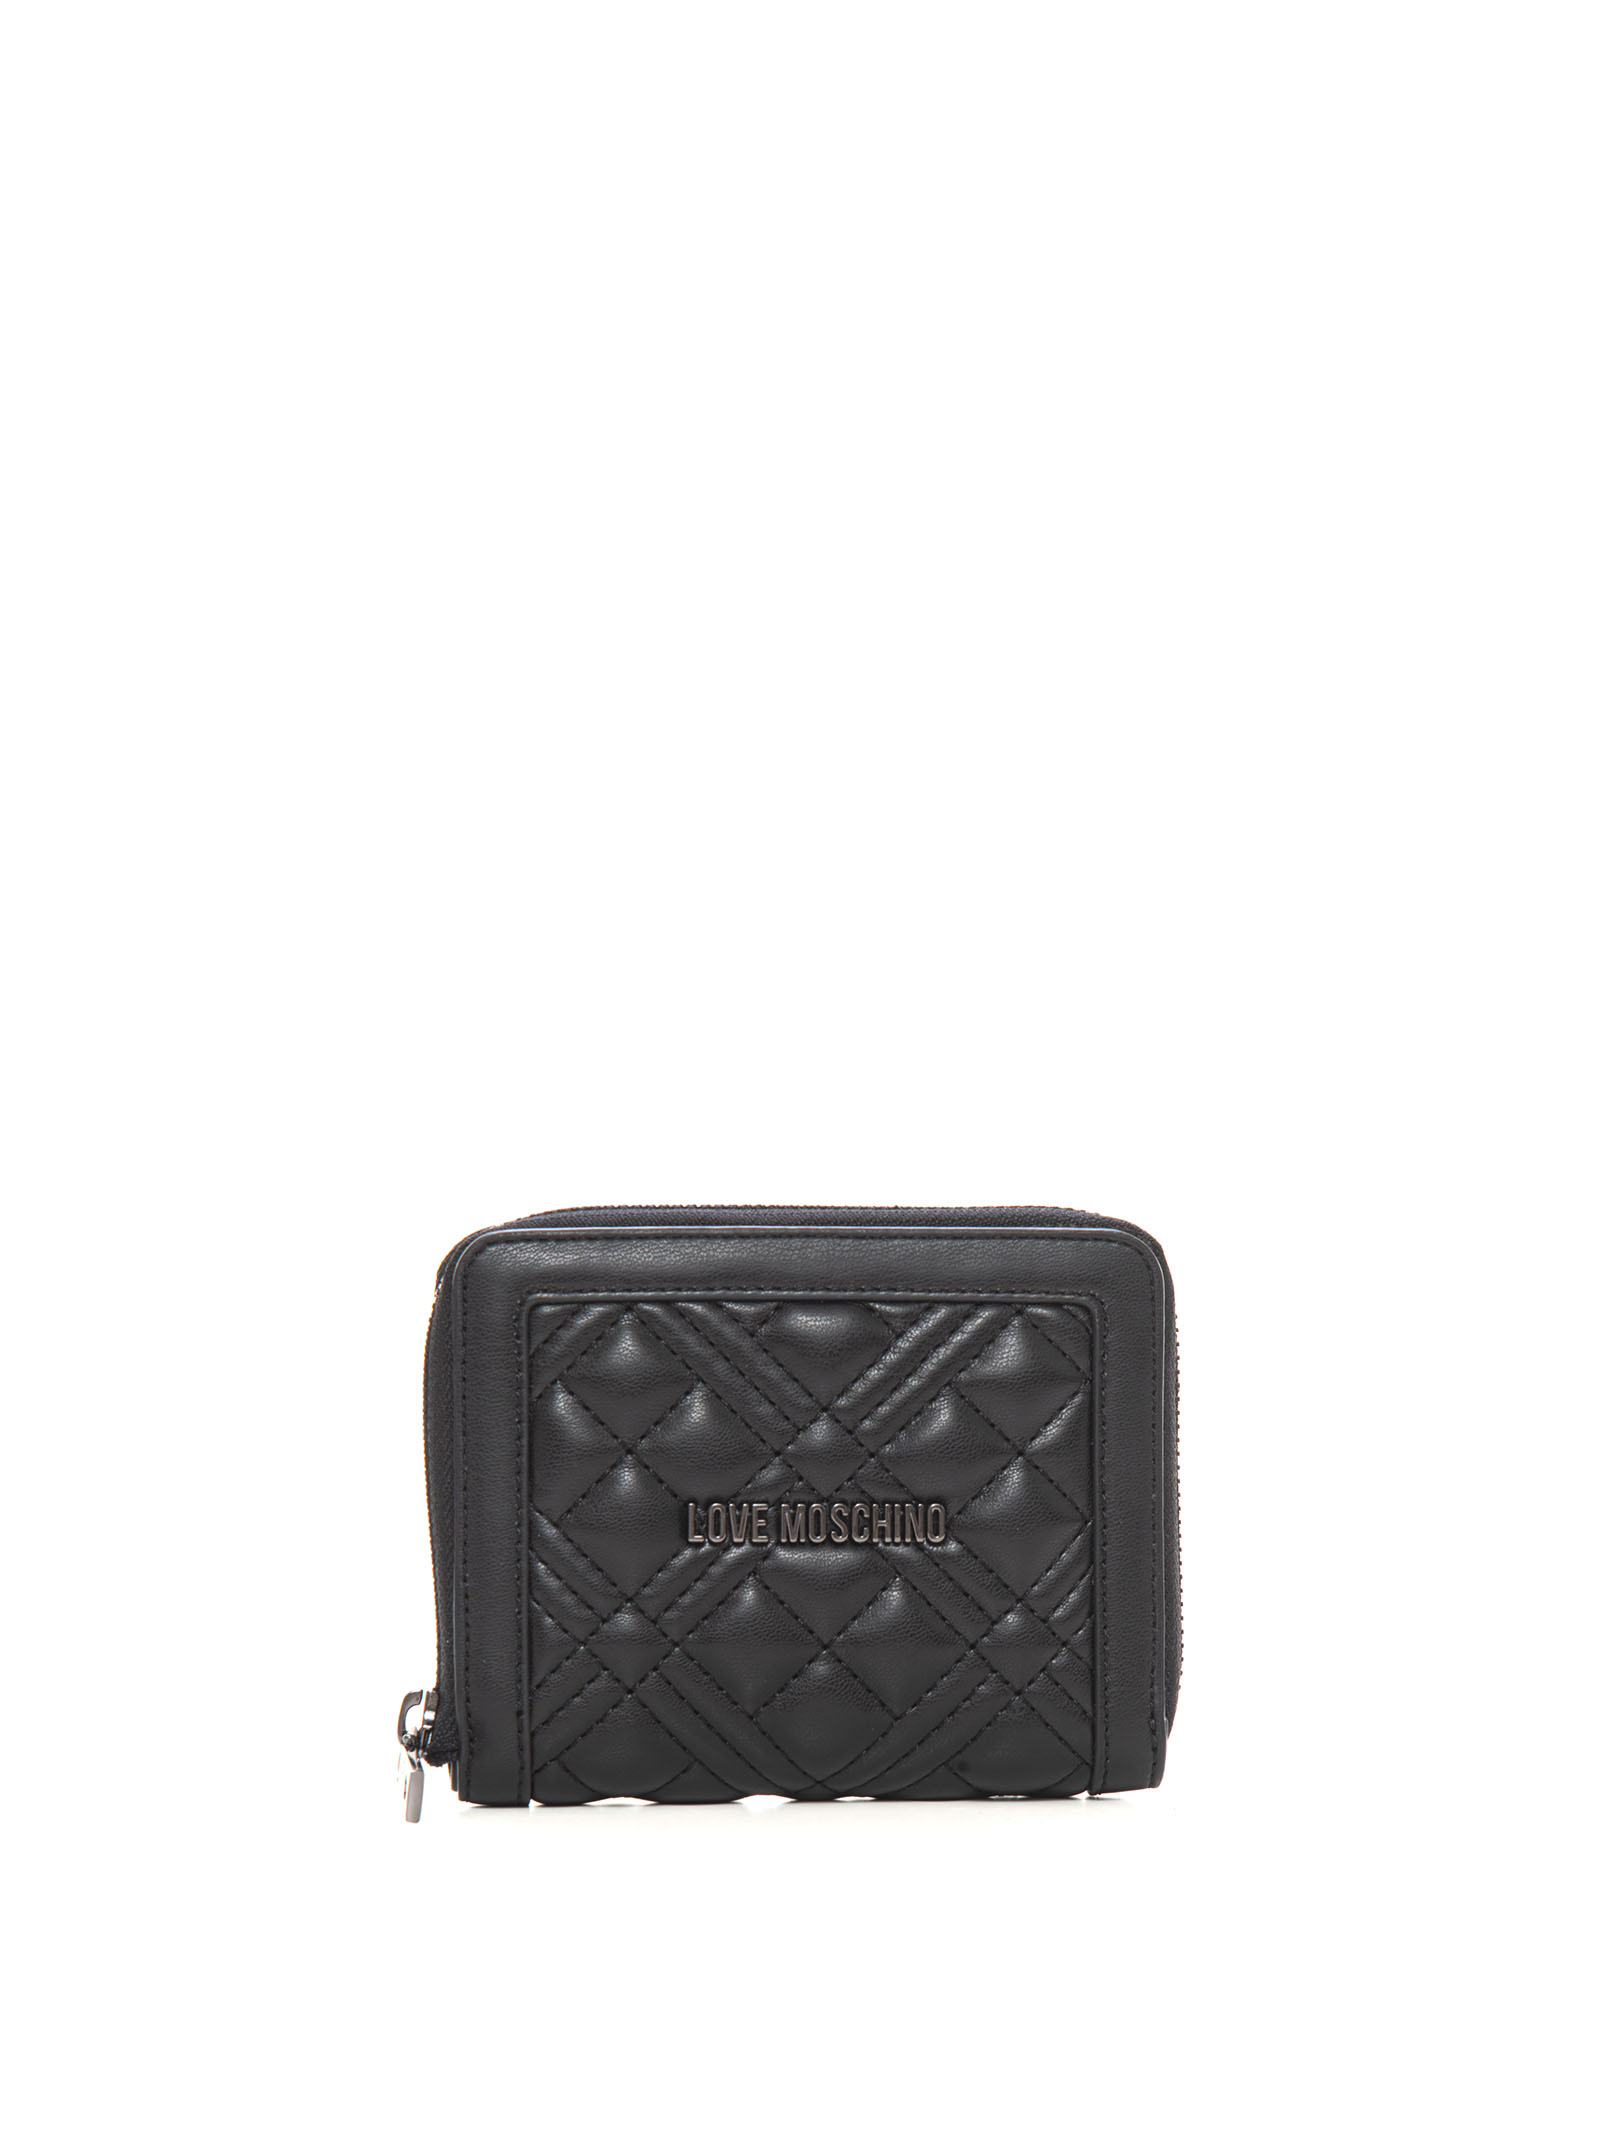 Love Moschino Wallet Medium Size In Black